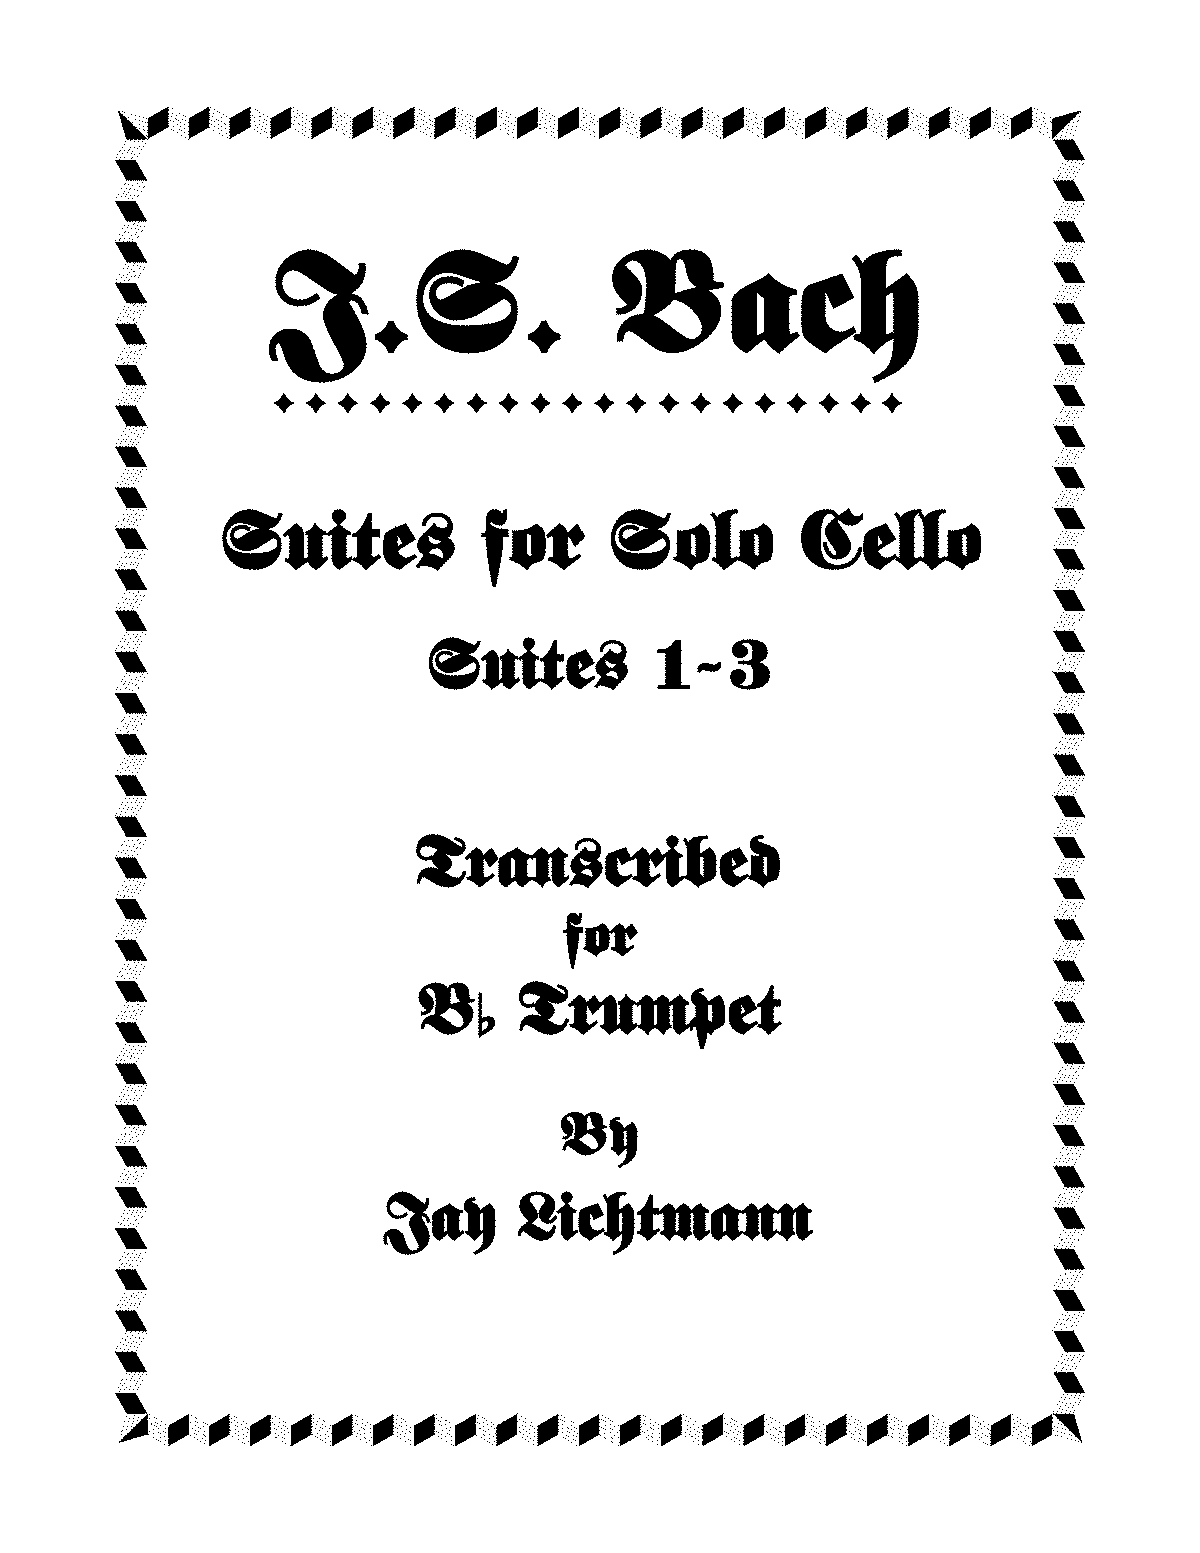 cello suite no 1 pdf